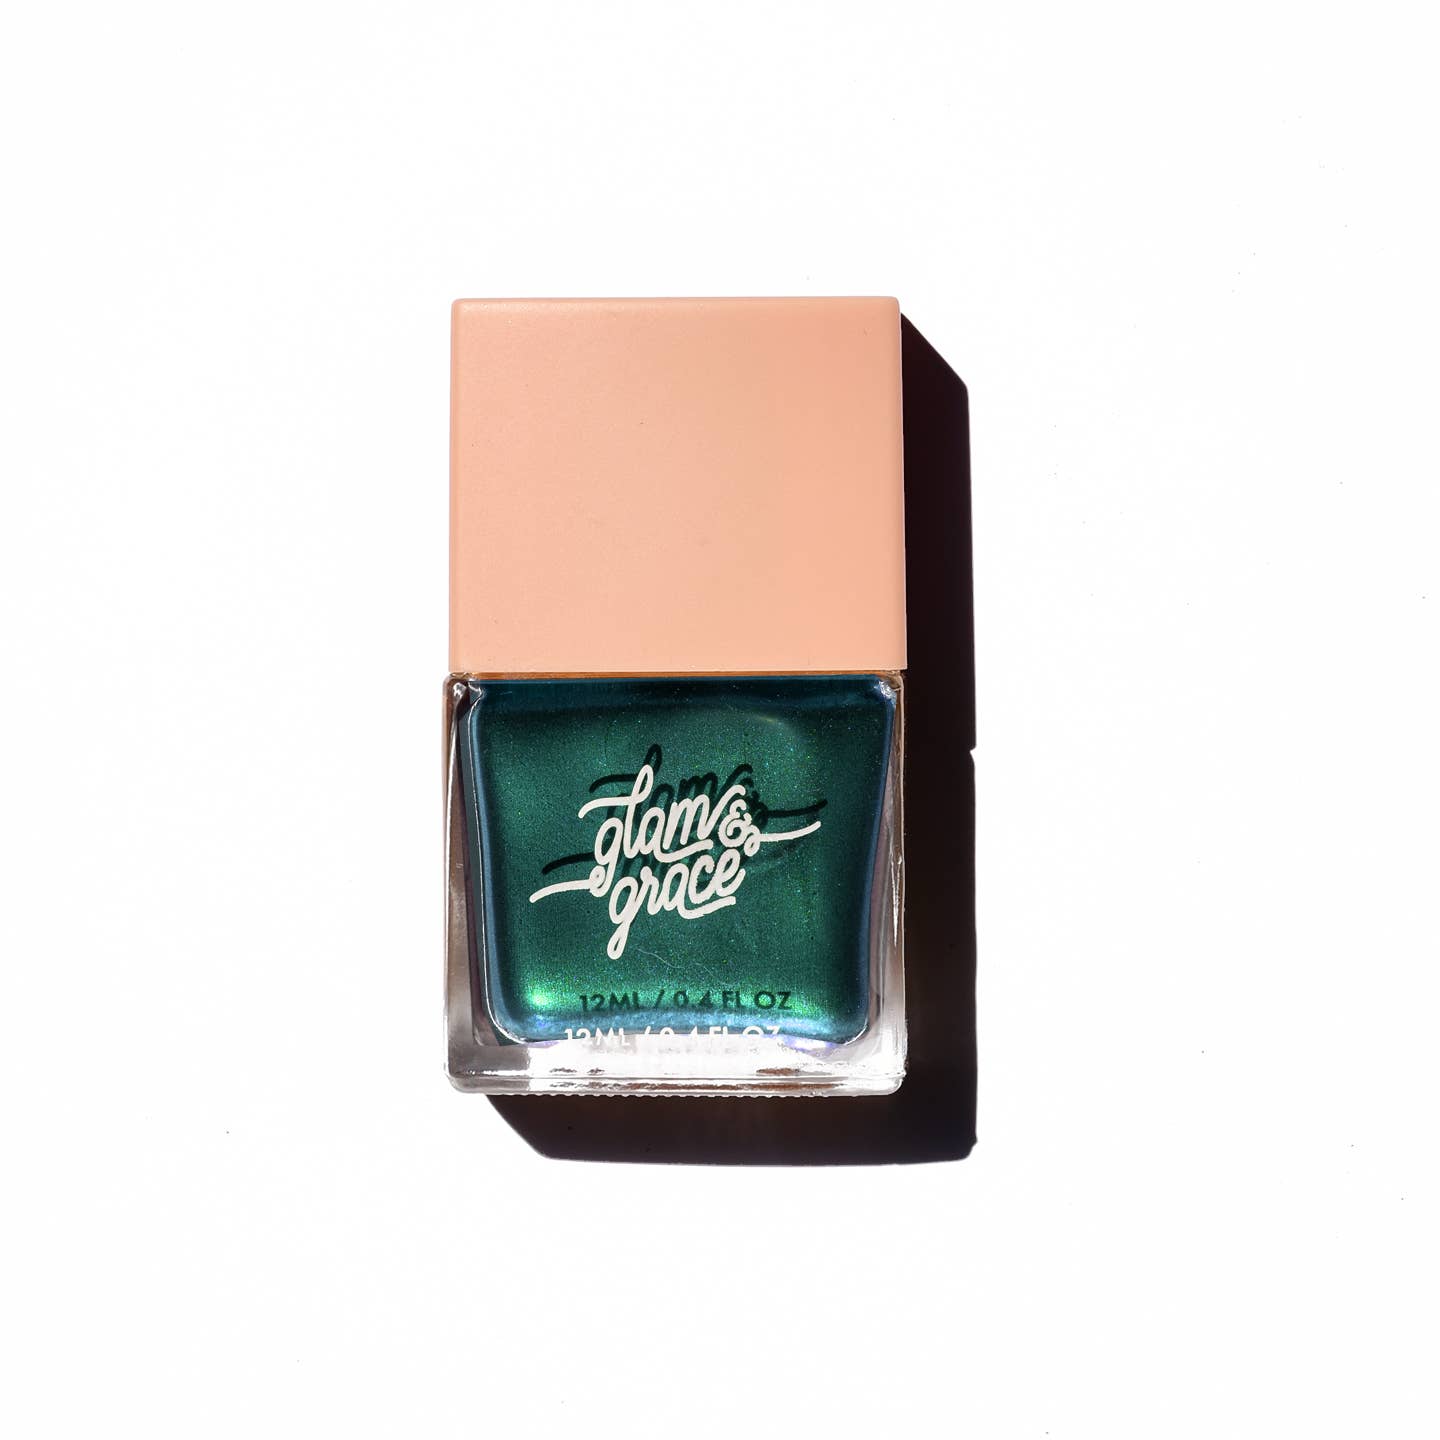 Glam & Grace - Nail Polish - Emerald